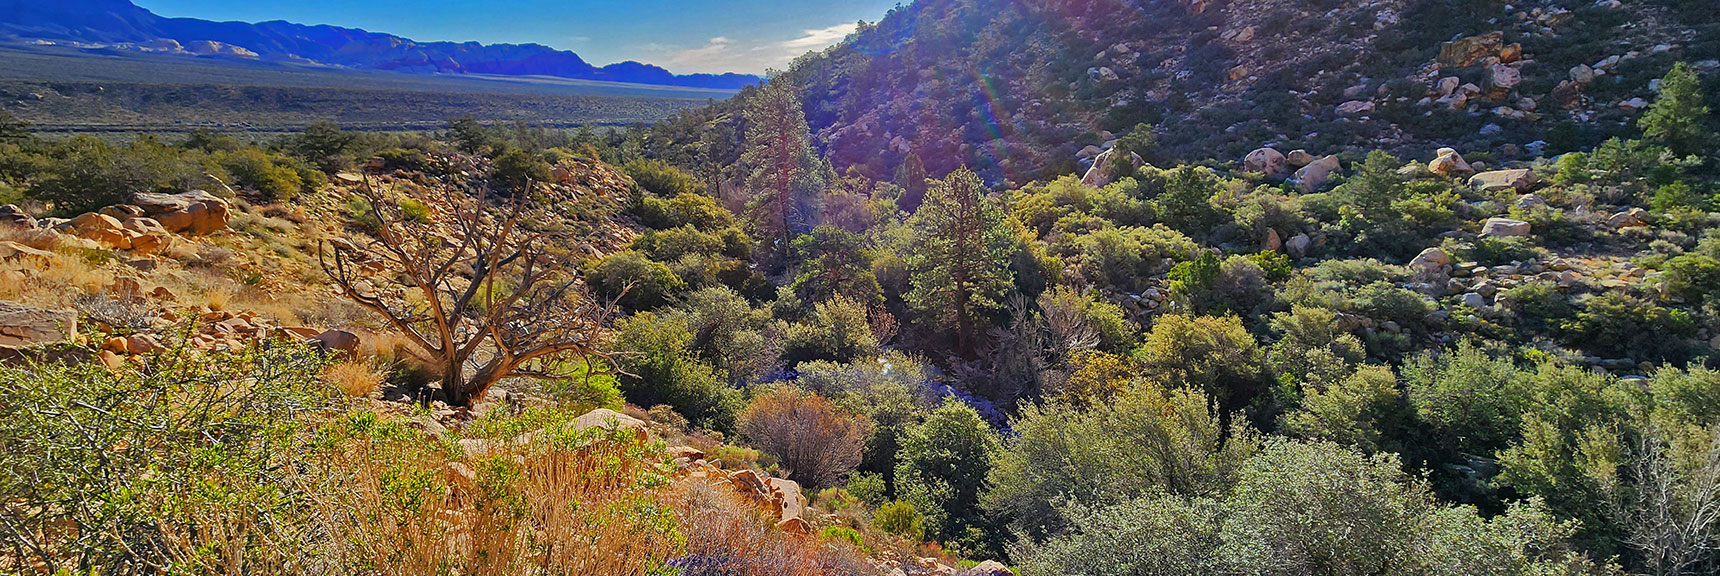 View Down the Canyon Along Creek Line Below in Canyon Base | Ice Box Canyon | Red Rock Canyon NCA, Nevada | Las Vegas Area Trails | David Smith